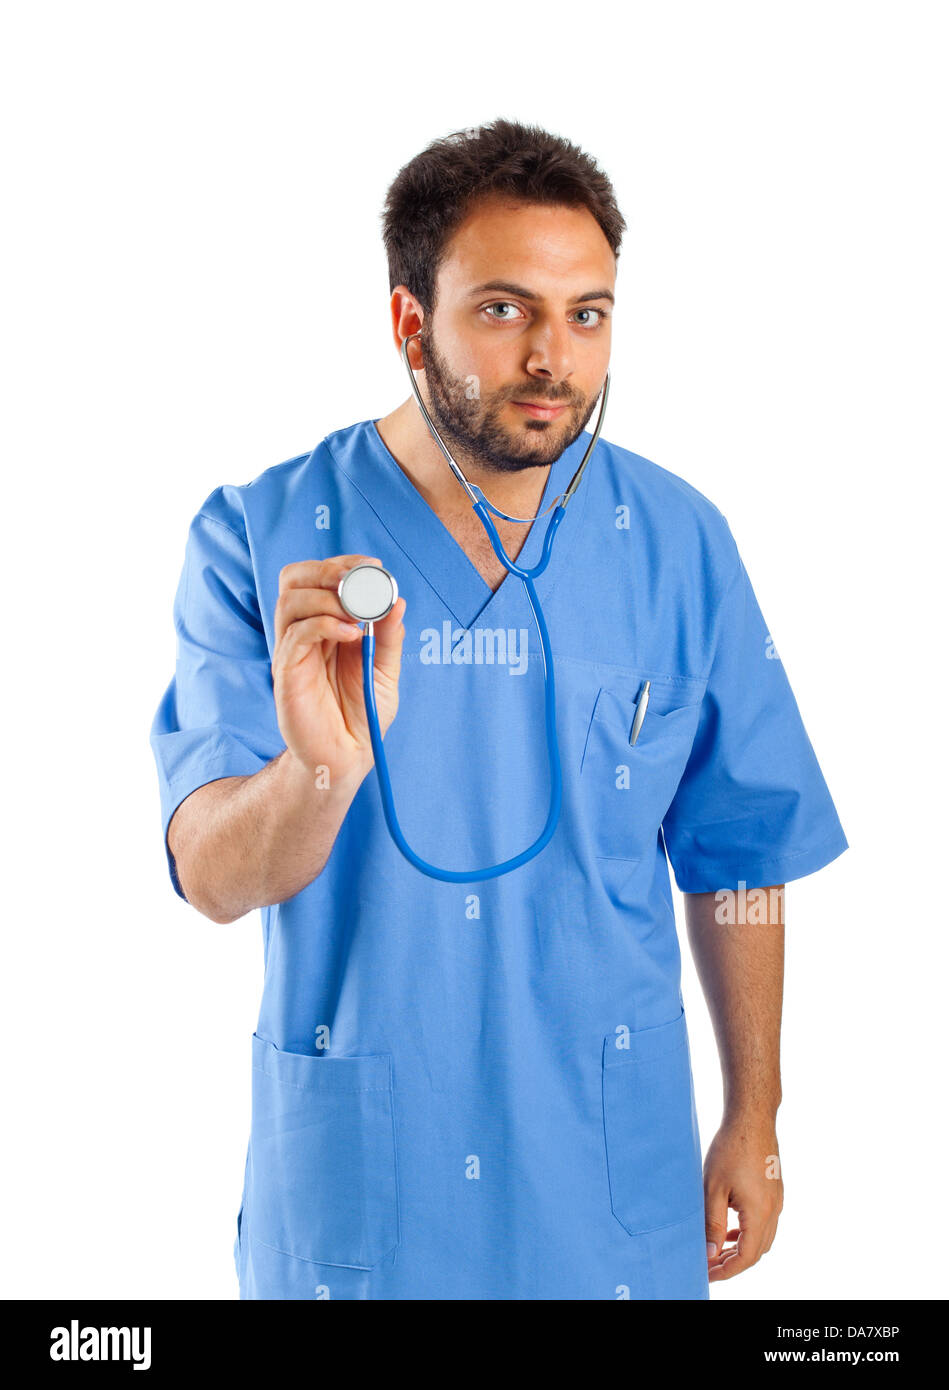 Male nurse portrait on white background Stock Photo